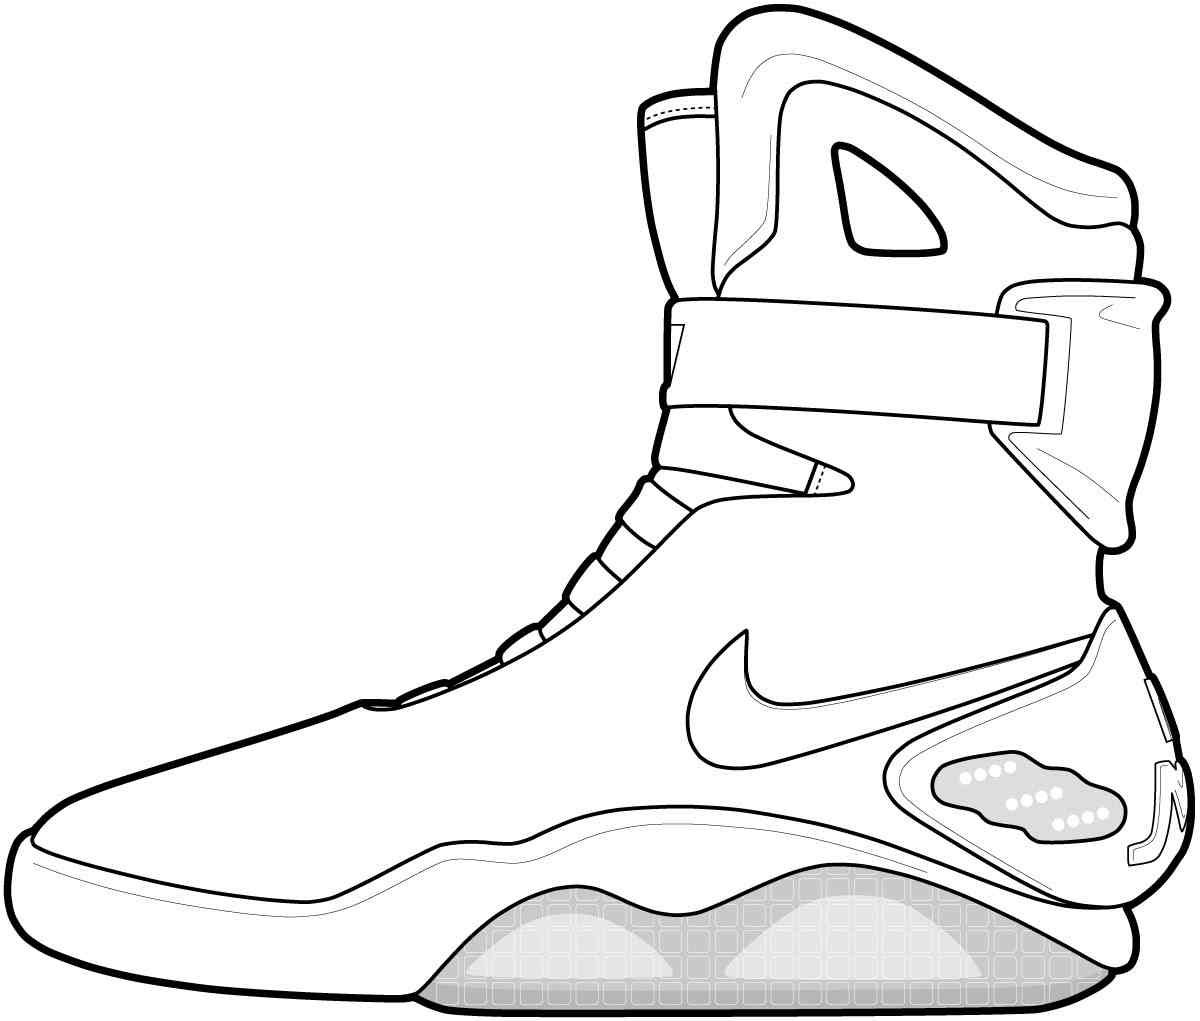 Jordan Coloring Pages Pdf to Print - Jordan Sneakers Coloring Pages